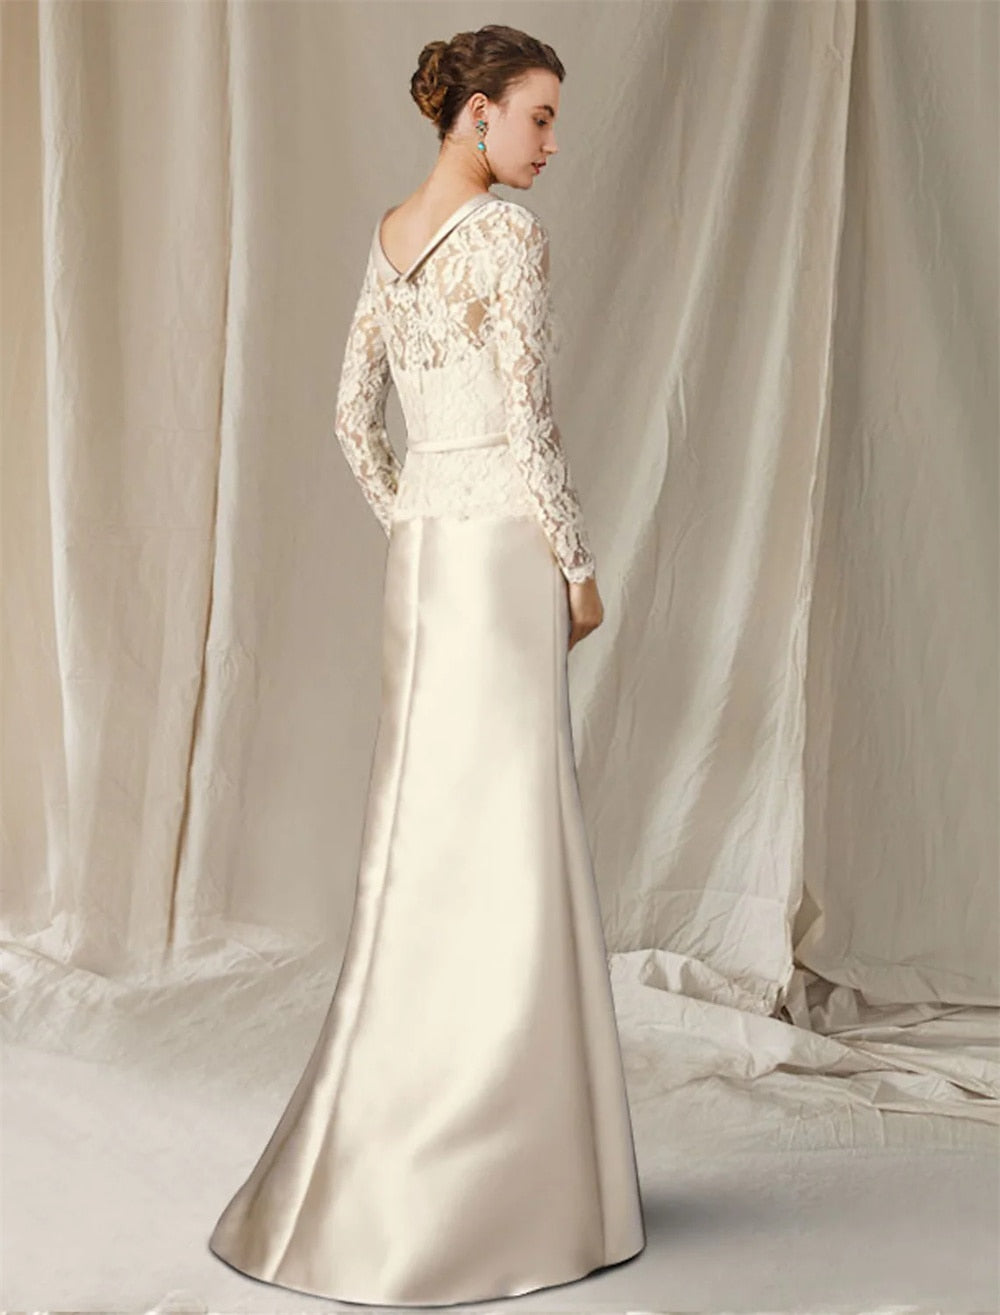 White Long Sleeve V-Neck Bride Dress with Bow Flower